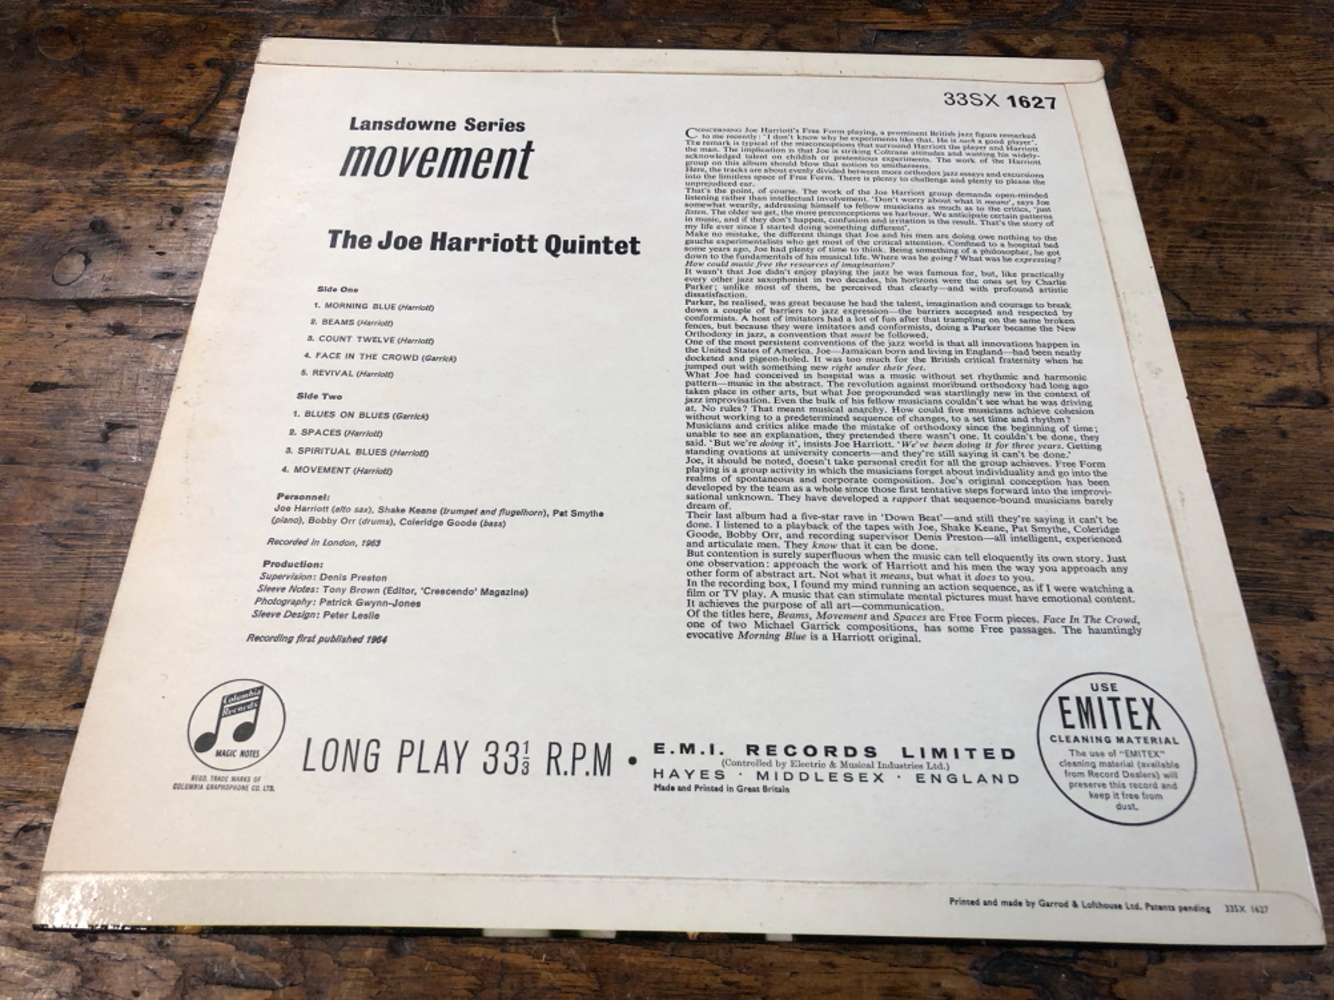 THE JOE HARRIOTT QUINTET - MOVEMENT LP 1964 MONO 1ST PRESSING COLUMBIA 33SX 1627 FRONT LAMINATED - Image 3 of 5